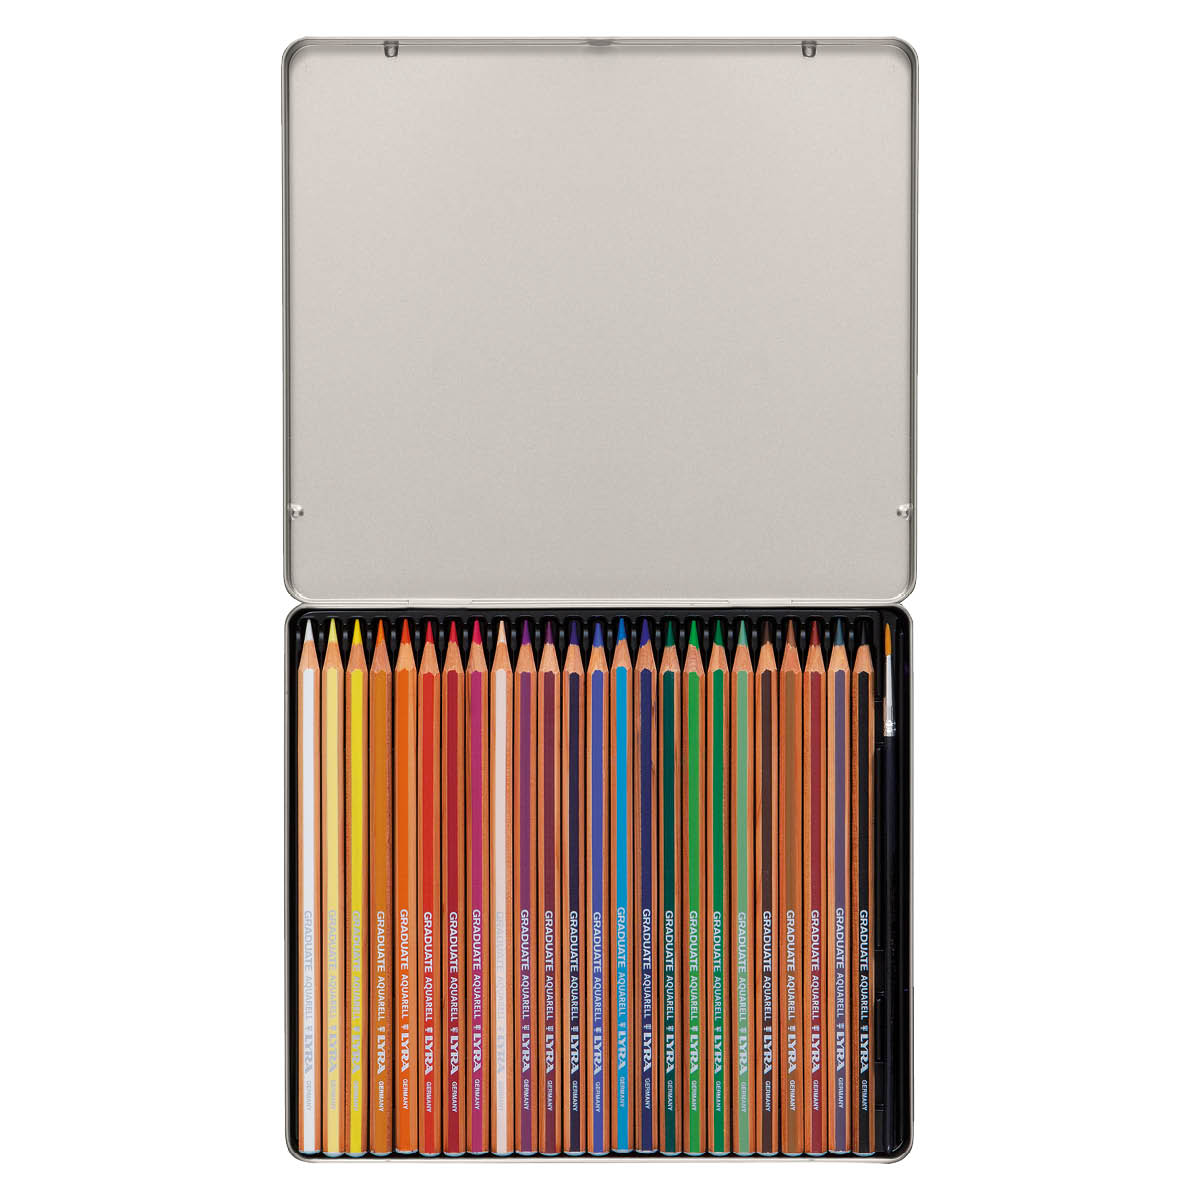 Graduate Aquarell 24-set in the group Pens / Artist Pens / Watercolor Pencils at Pen Store (125960)